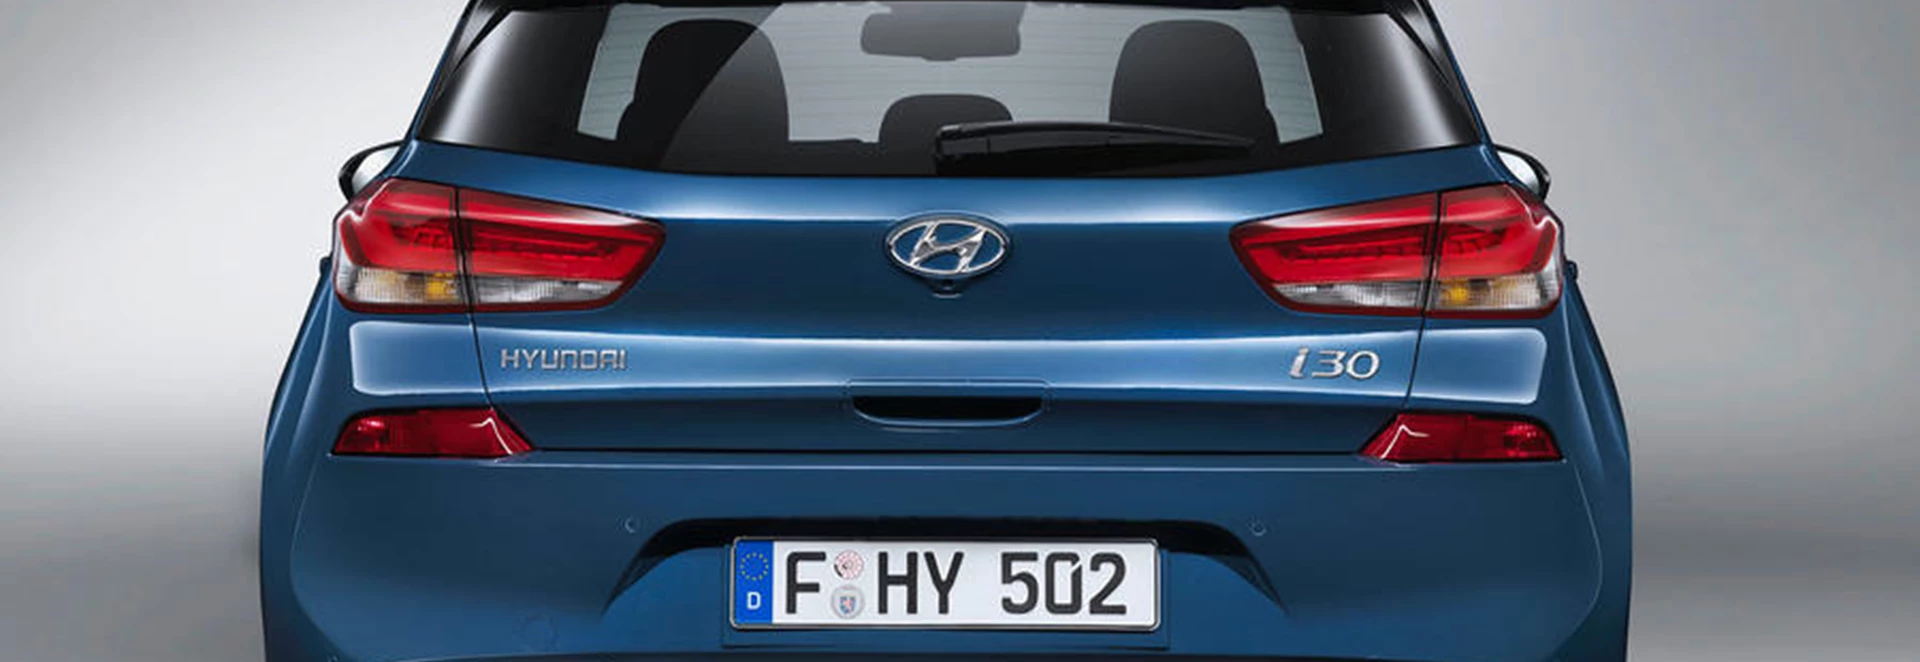 2017 Hyundai i30 UK launch details confirmed